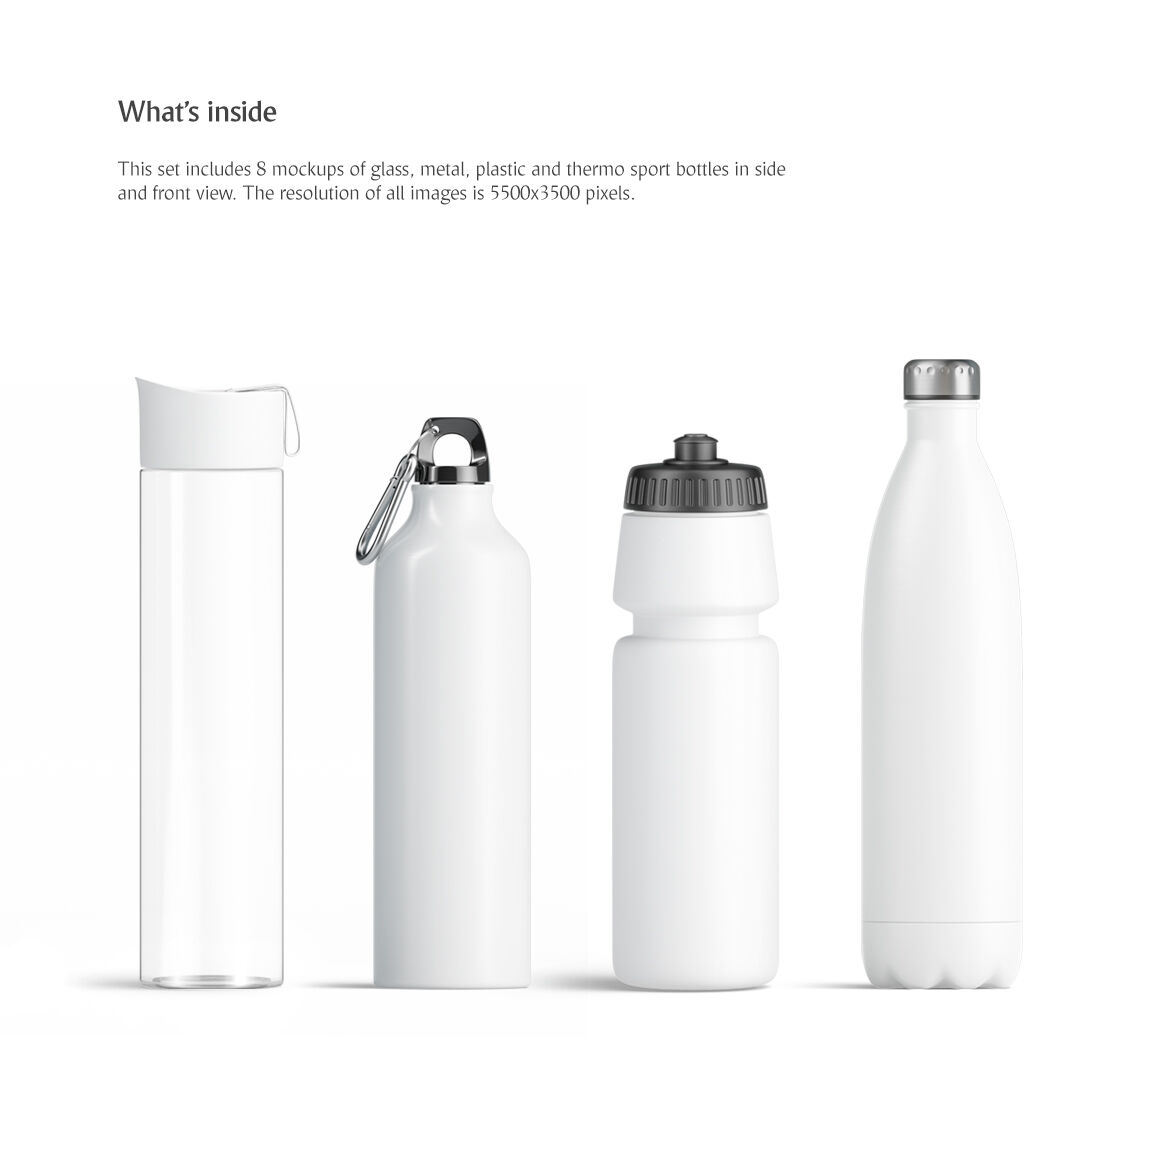 Download Aluminum Water Bottle Psd Mockup Free - Free Mockups | PSD ...